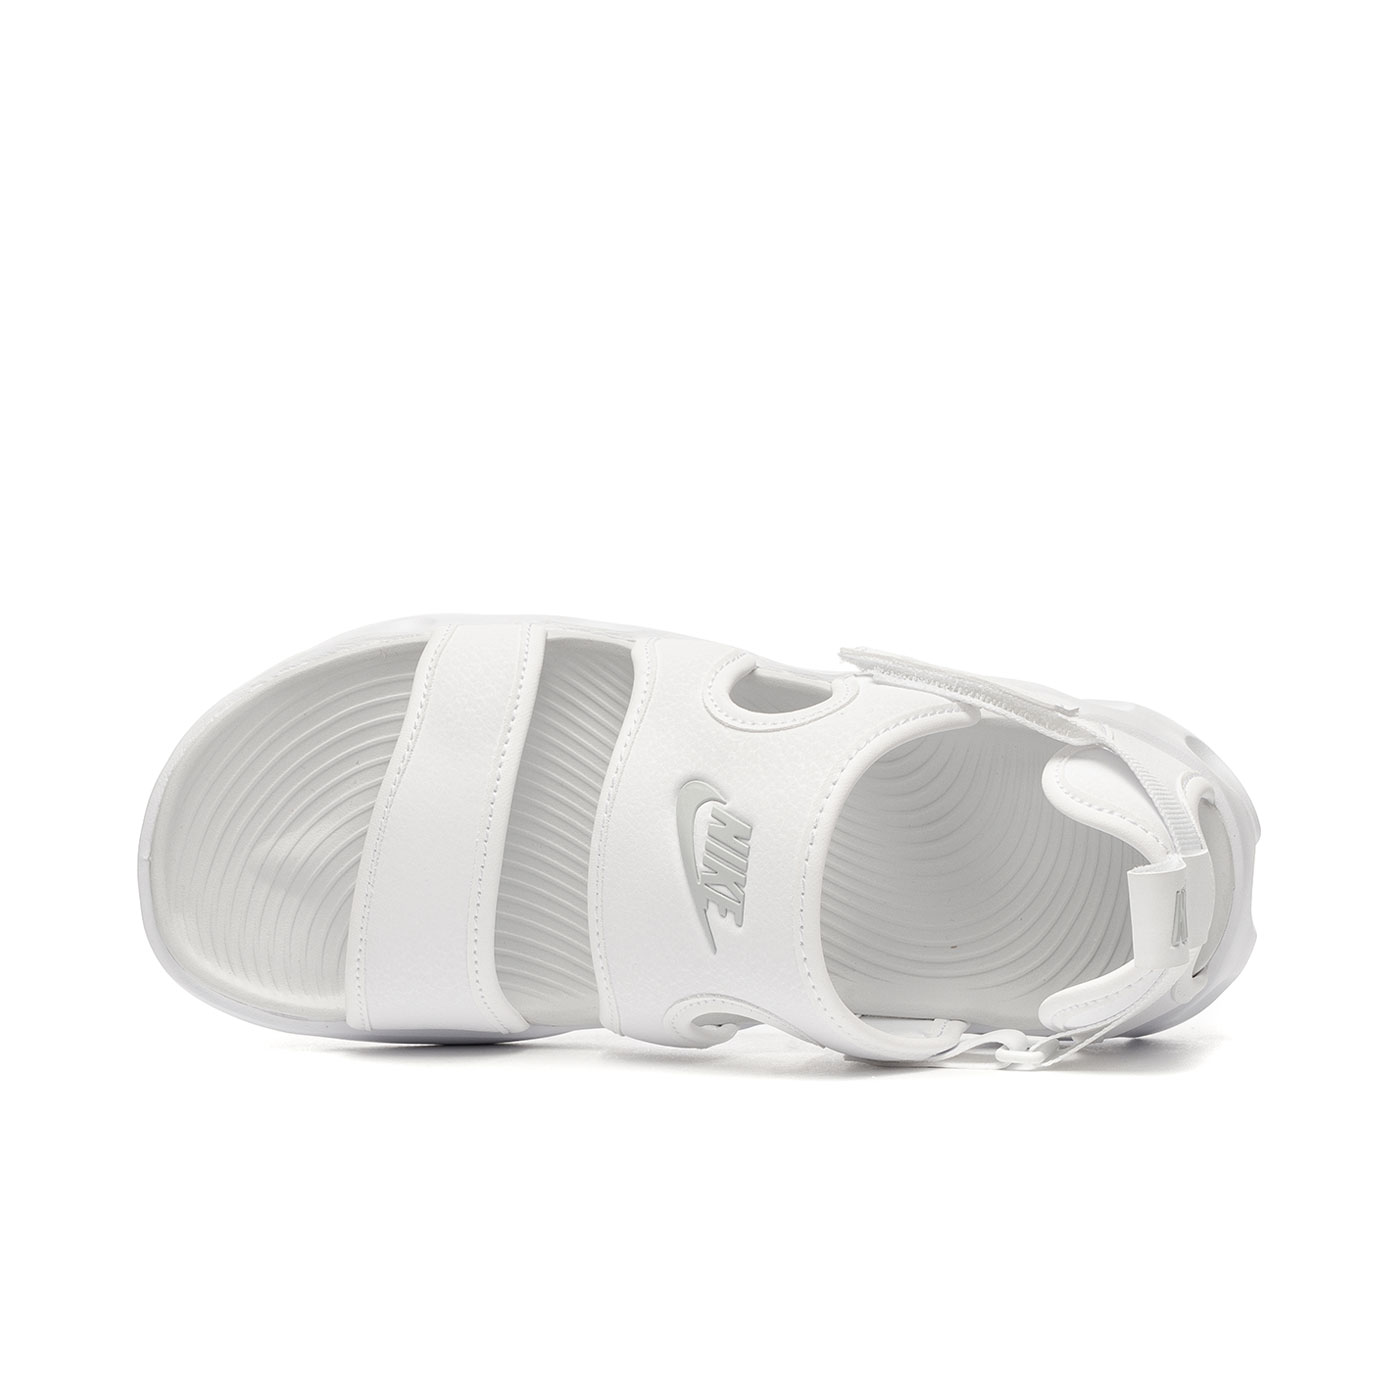 Nike Wmns Owaysis Sandal White/Pure Platinum | XTREME.PT